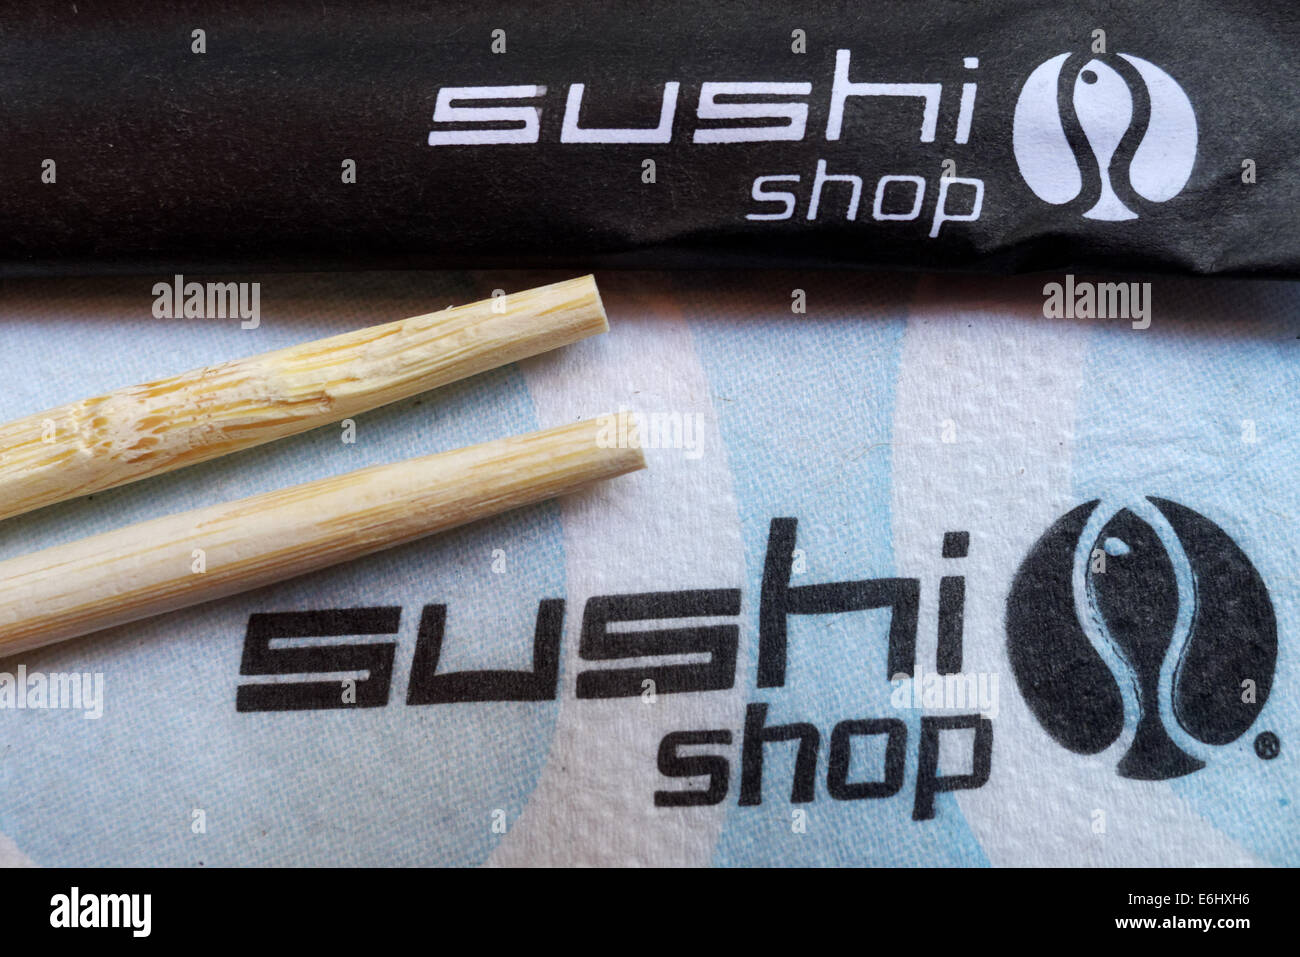 Sushi shop, una catena canadese di sushi ristoranti Foto Stock